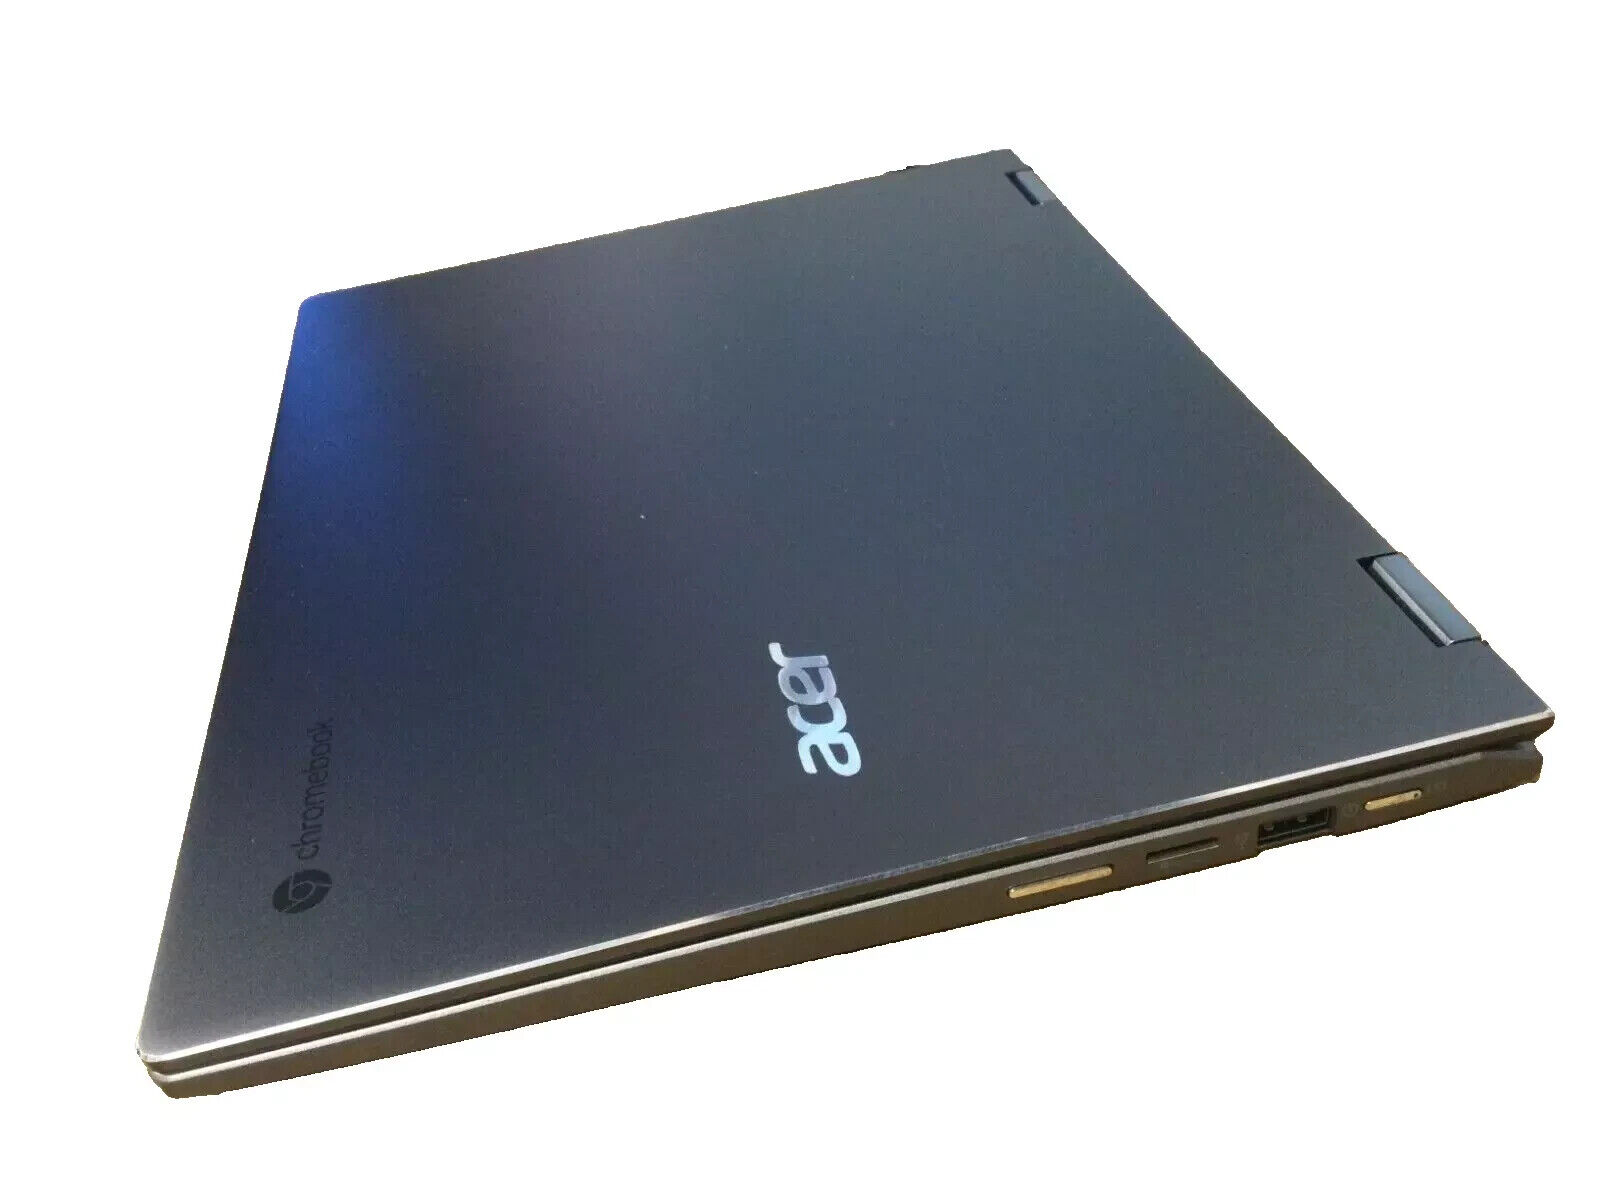 Acer Chromebook CP713-3W-76BL i7-1165G7 Quad-Core 2.80GHz 16GB 256GB